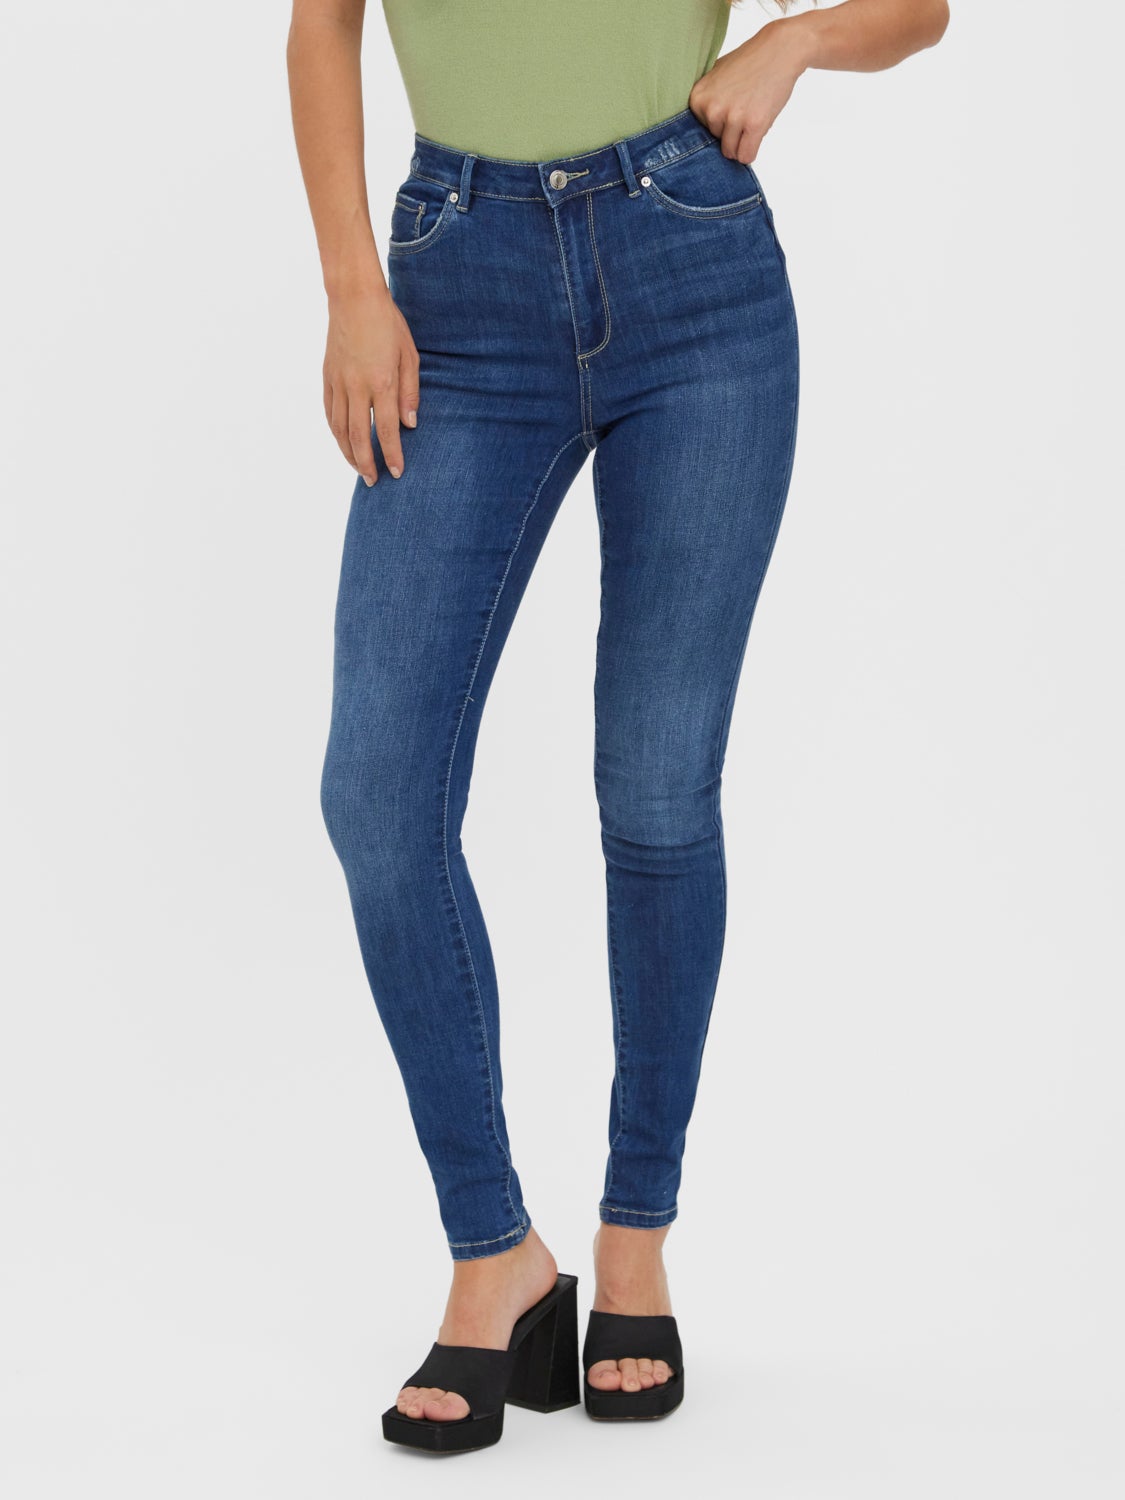 discount 56% Vero Moda Jeggings & Skinny & Slim Blue 46                  EU WOMEN FASHION Jeans Worn-in 